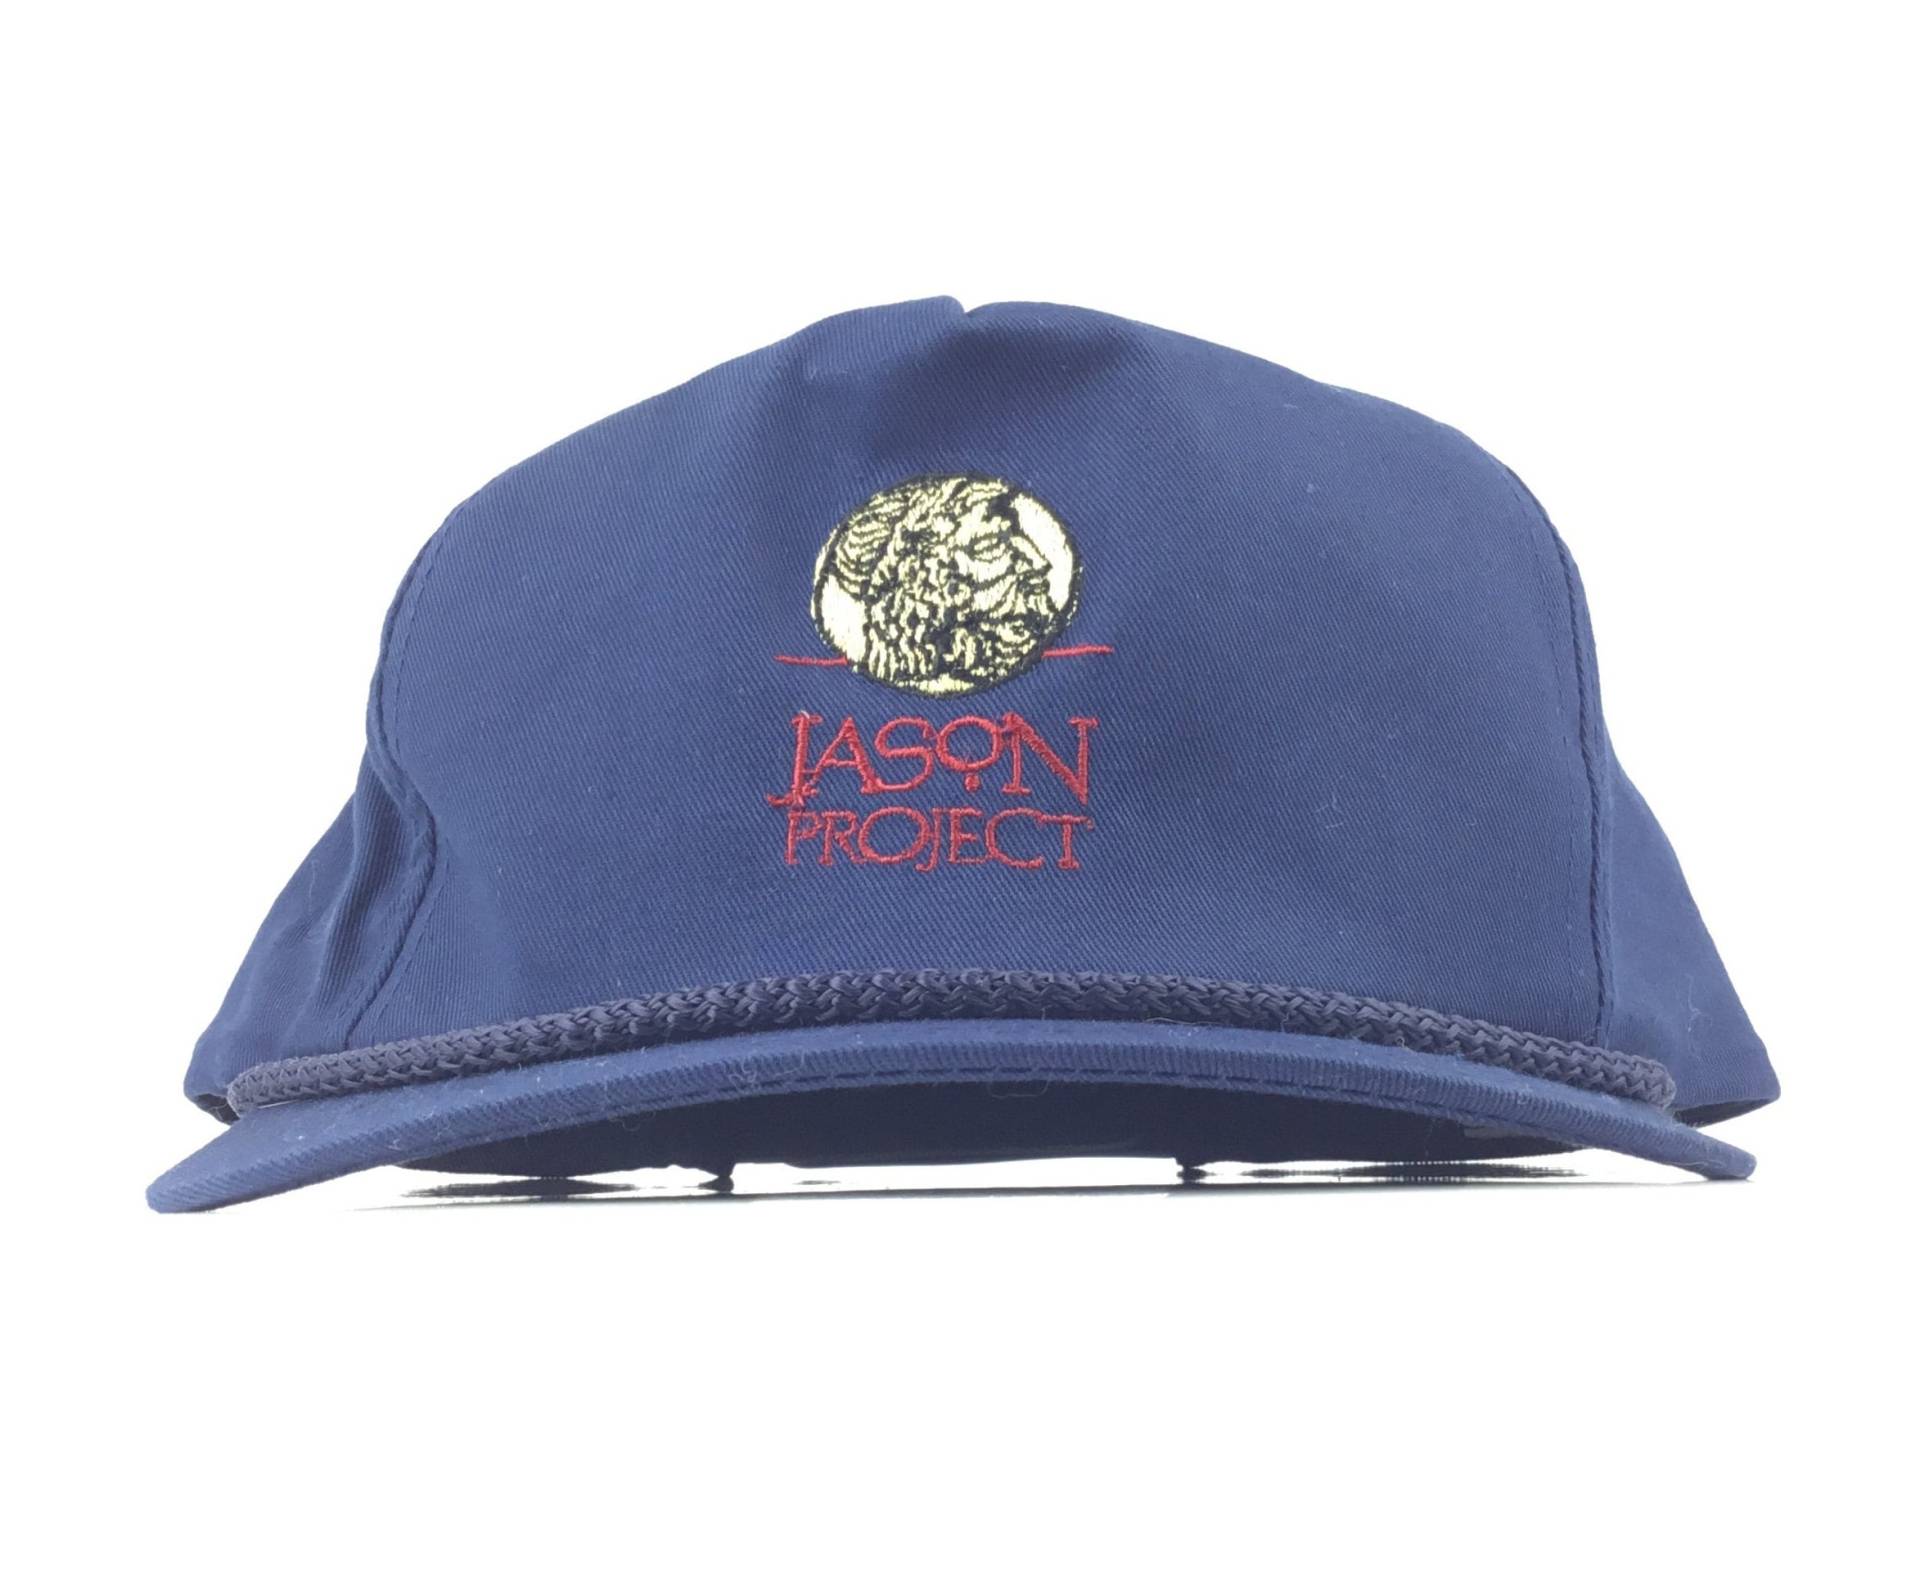 Vintage 1990S Bechtel Jason Project Navy Blue Baseball Cap Hat Snapback Mens Size Cotton Blend von arm90210